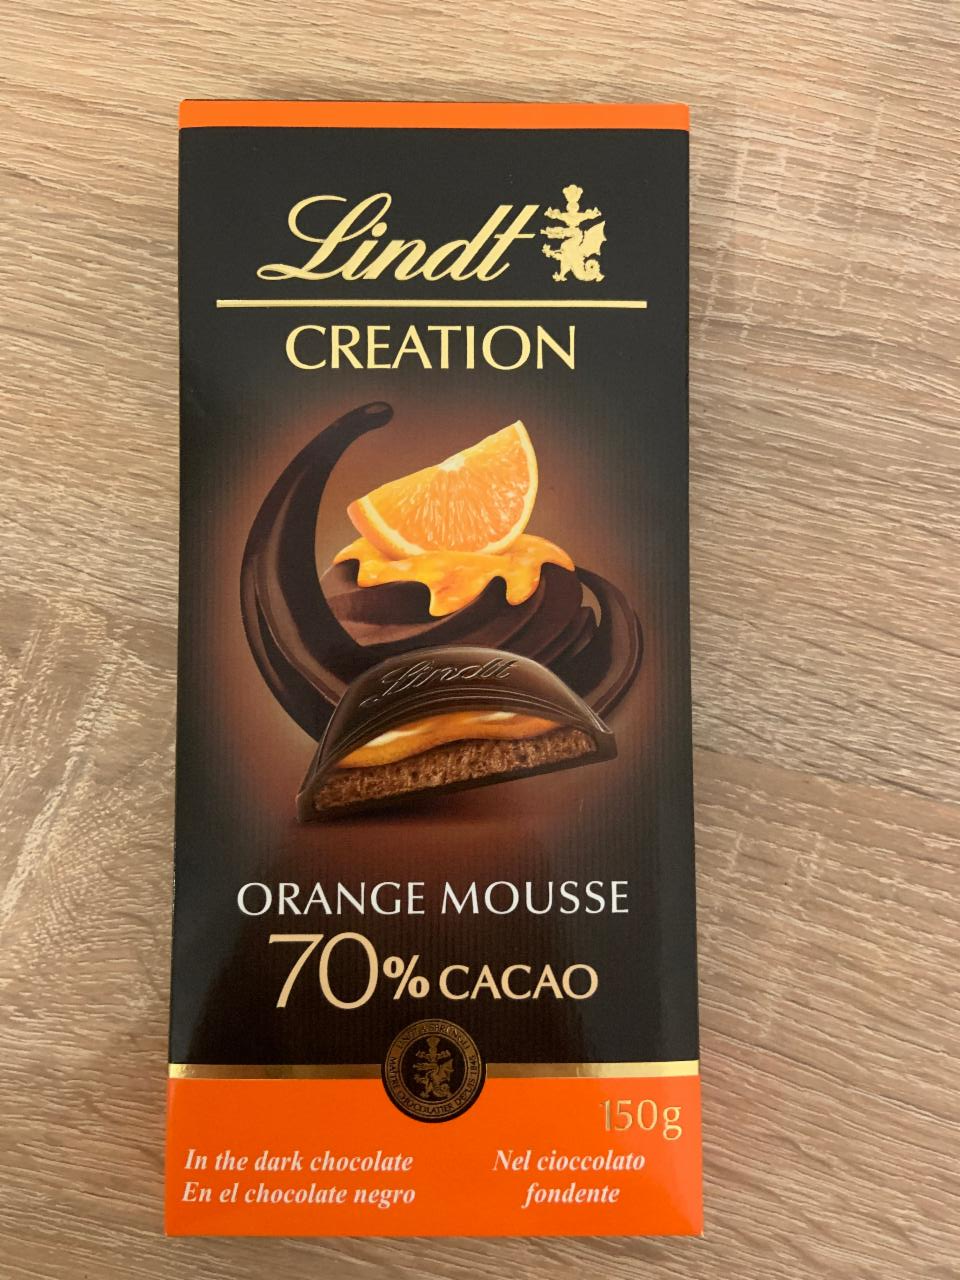 Fotografie - Orange Mousse 70% cacao Lindt Creation